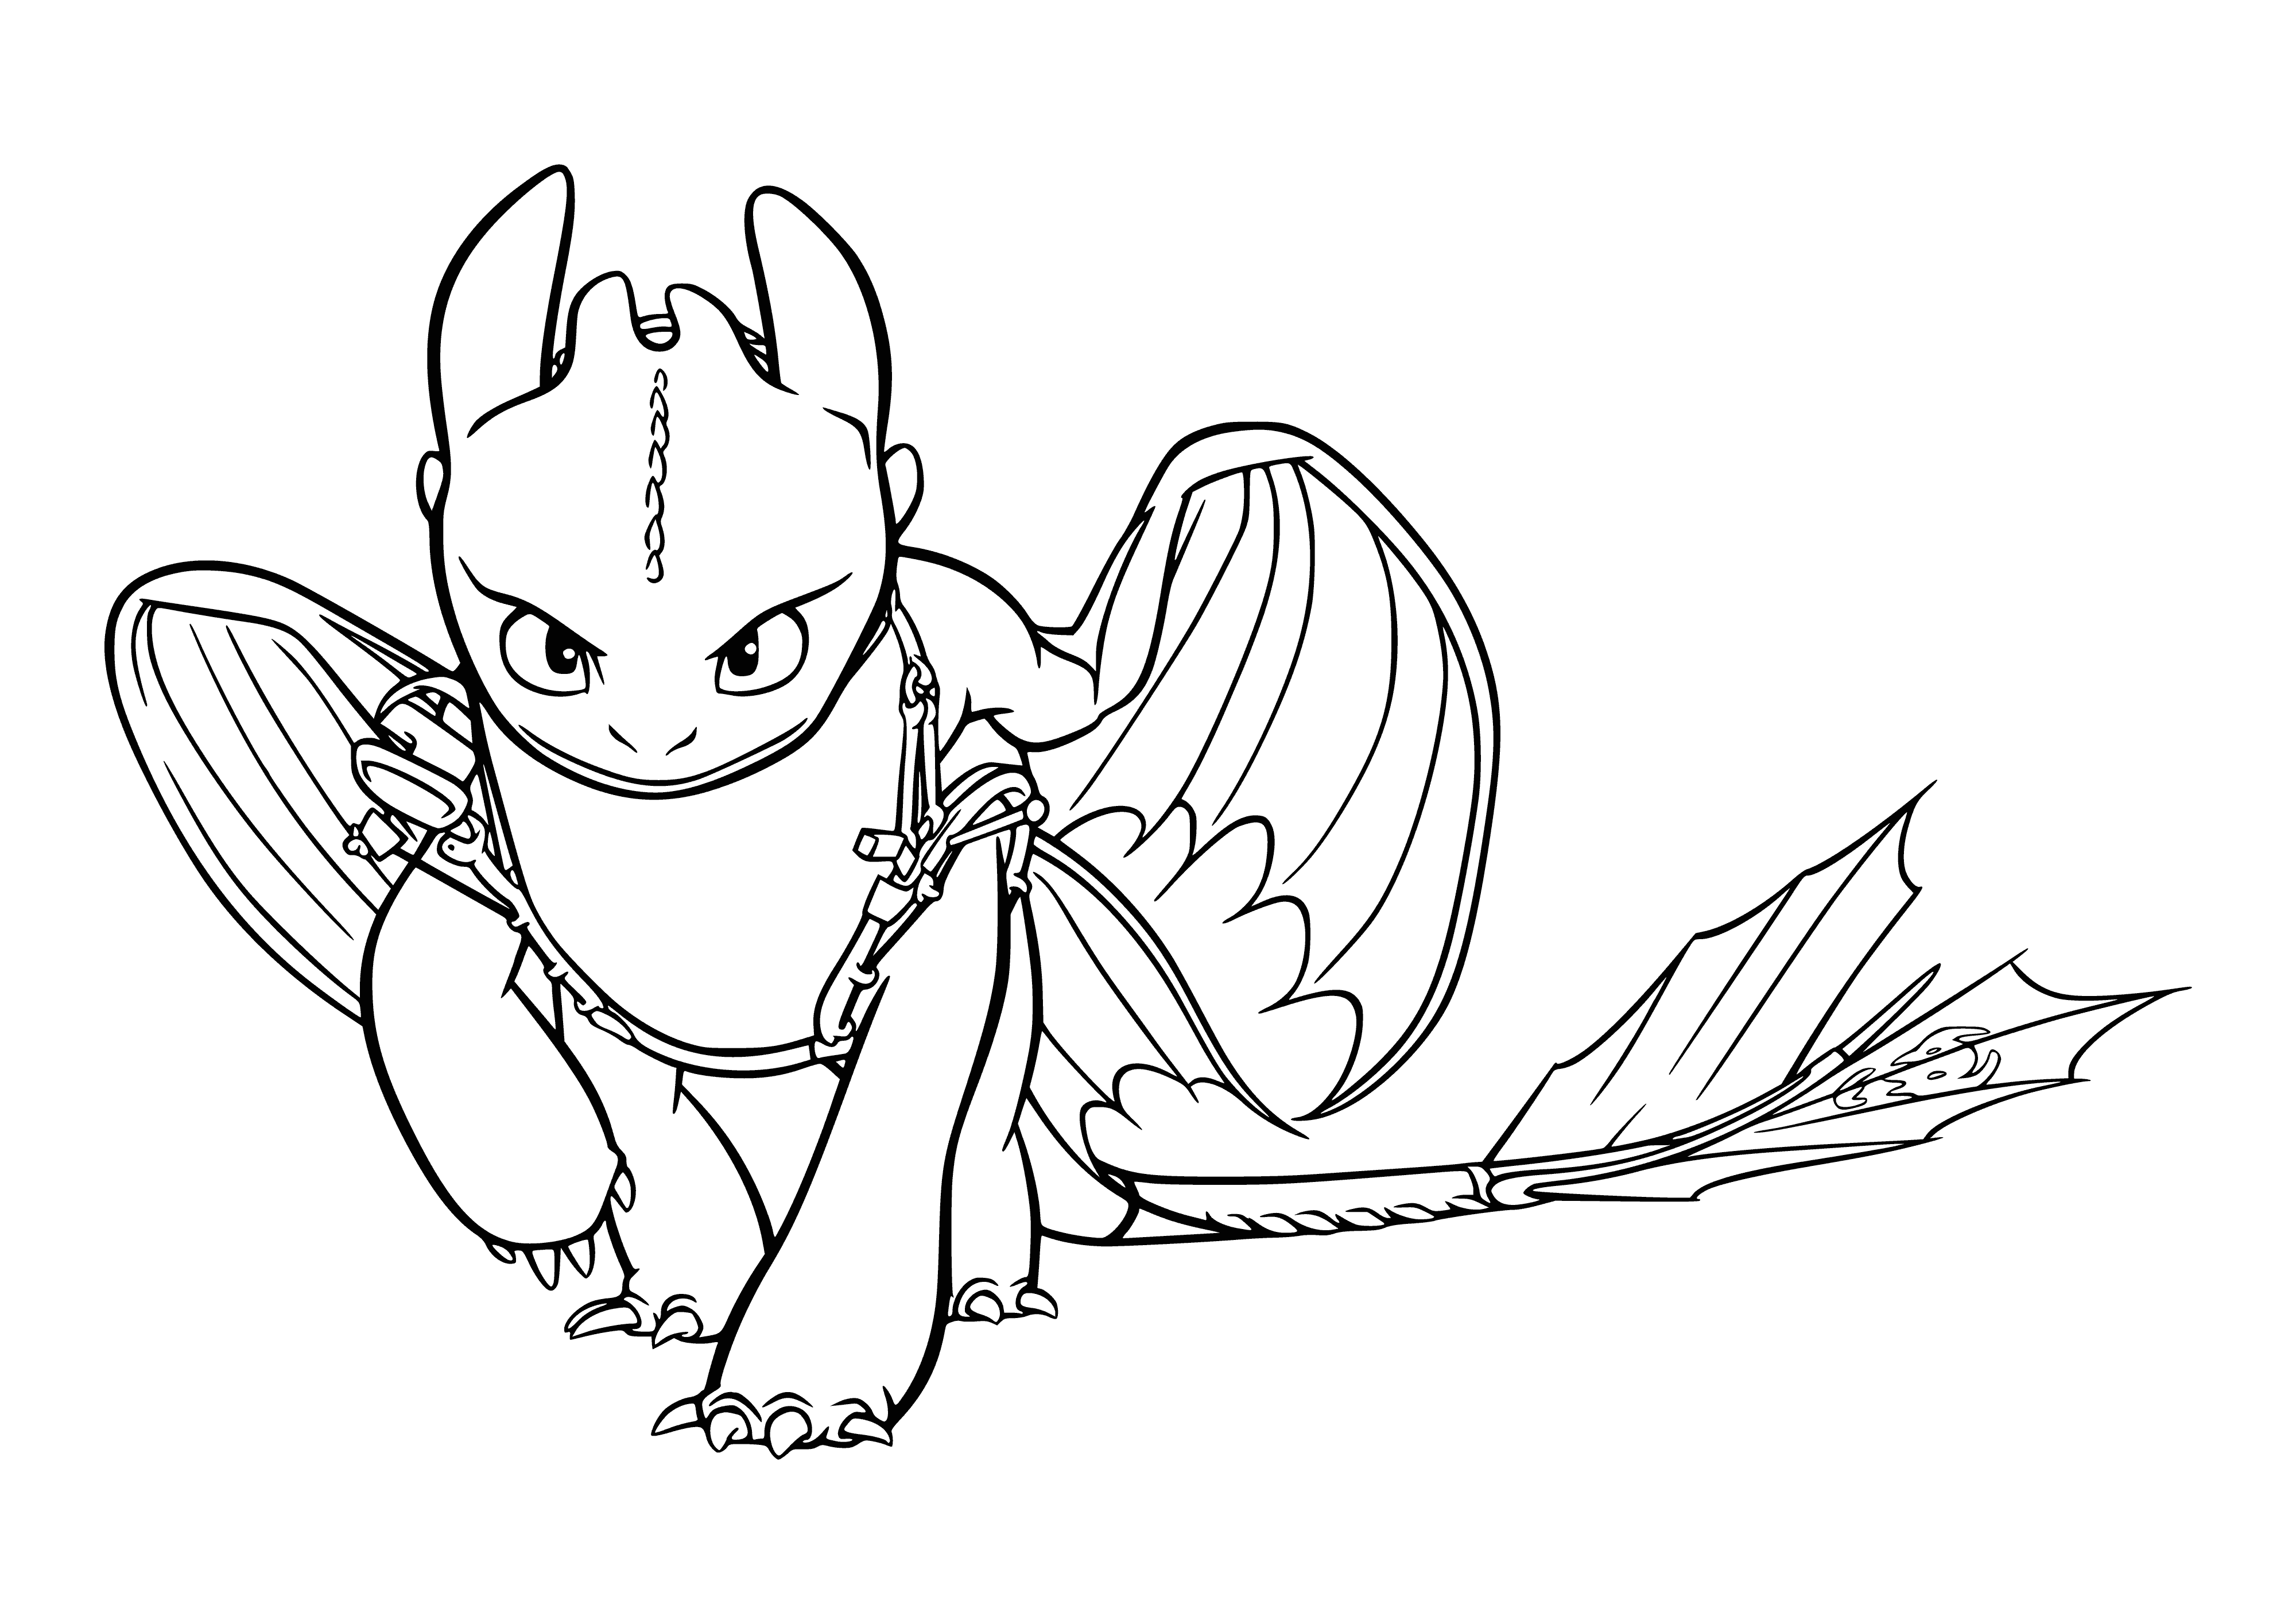 Dragon Bezzubik coloring page